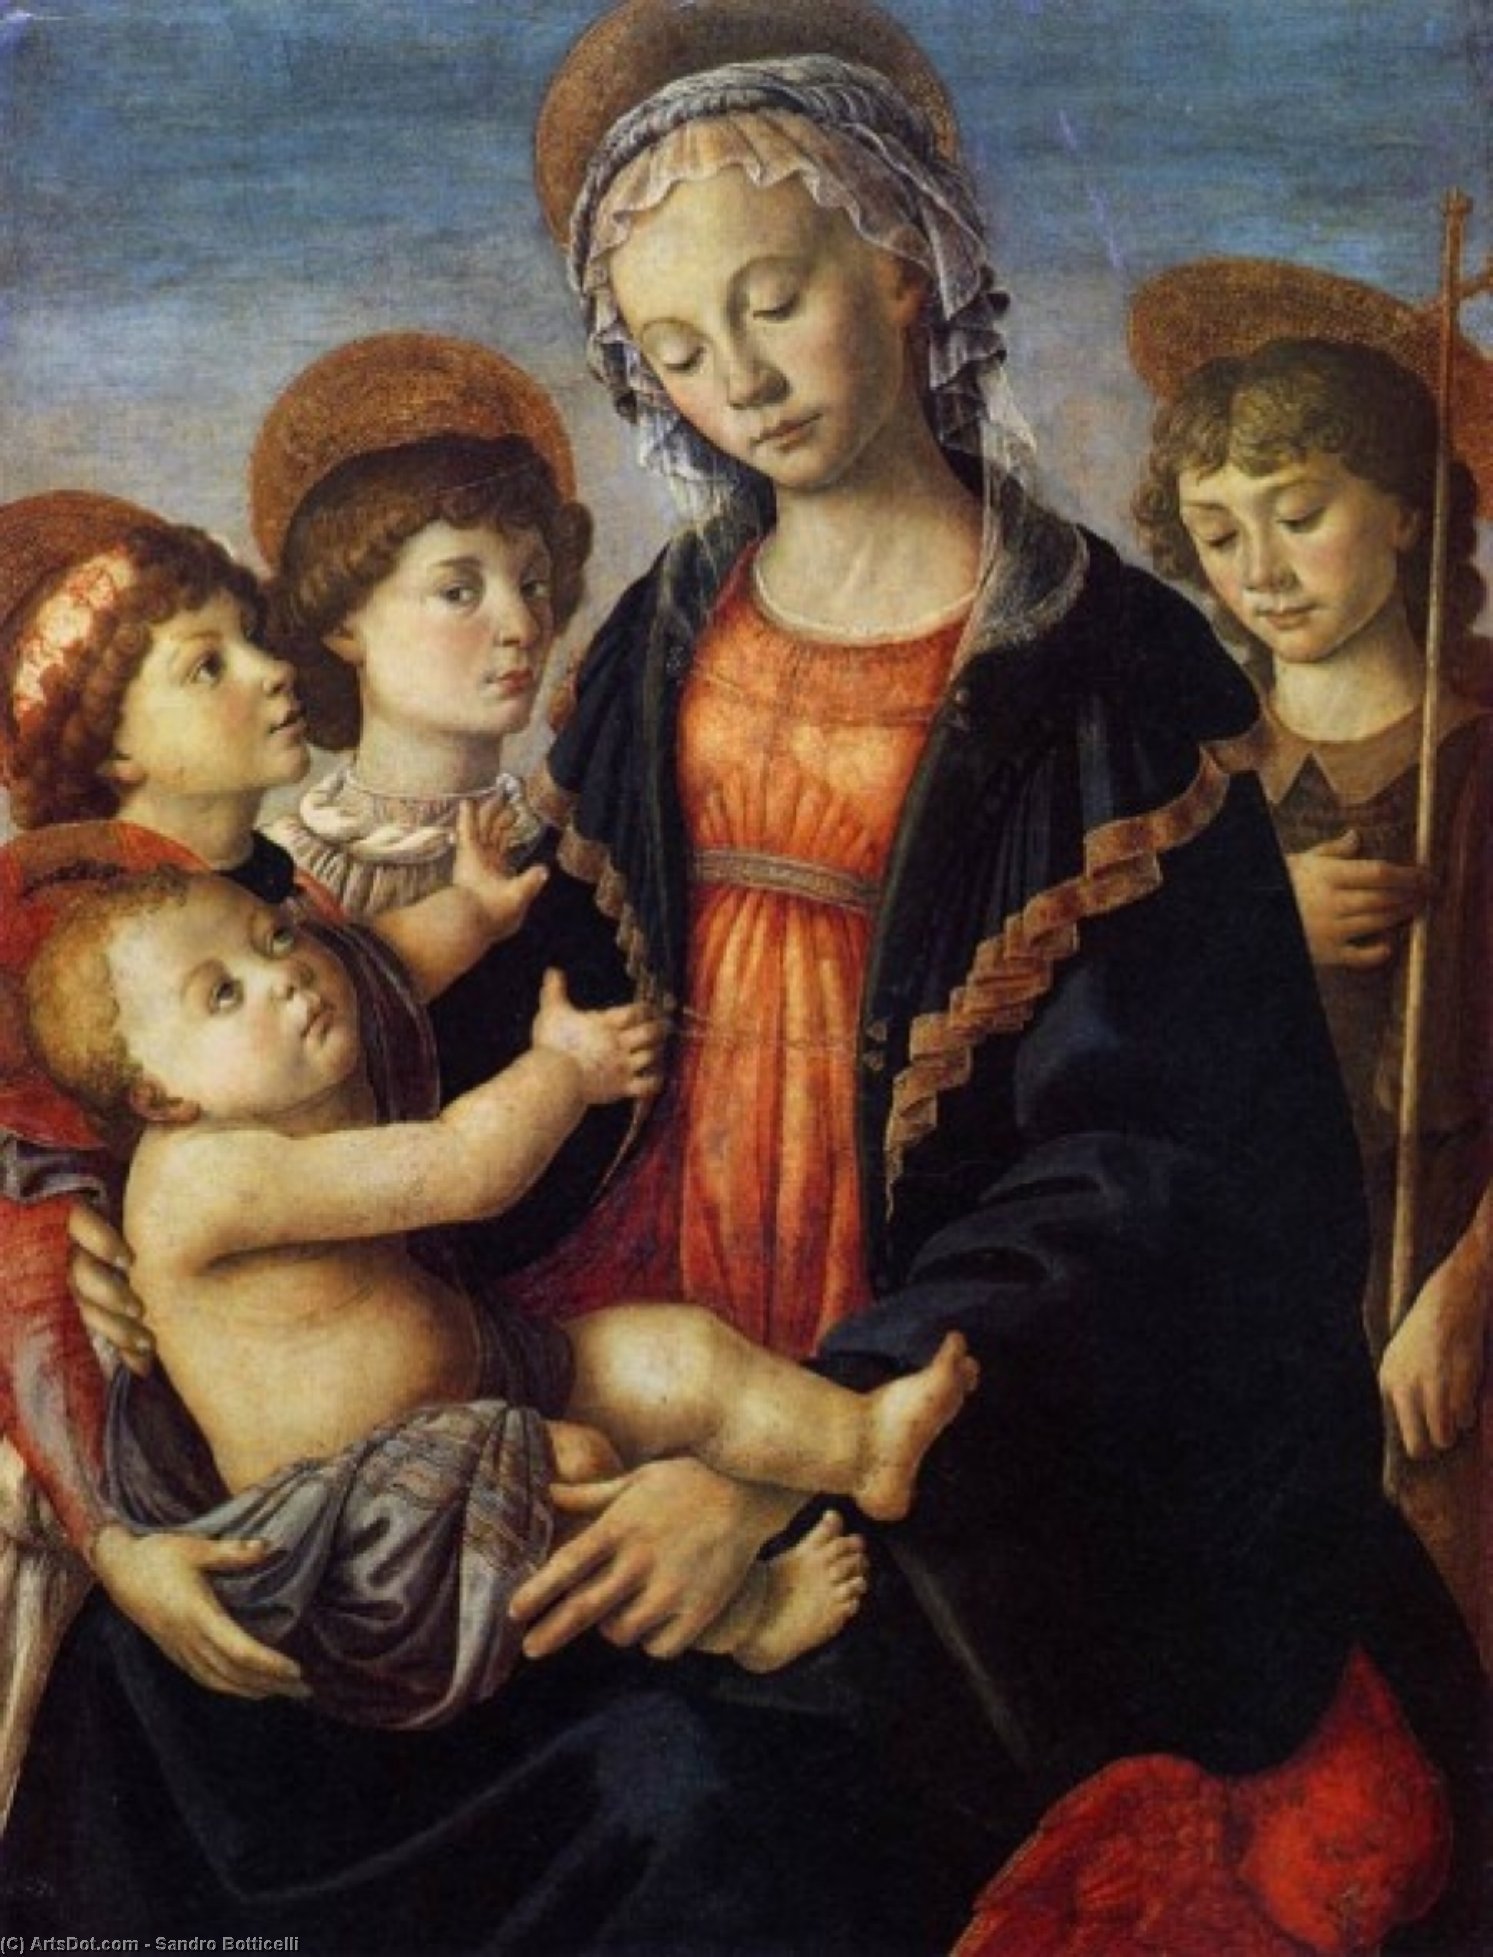 WikiOO.org – 美術百科全書 - 繪畫，作品 Sandro Botticelli -  处女  和  儿童与  两个天使  和  年轻  st  约翰  的  浸礼者